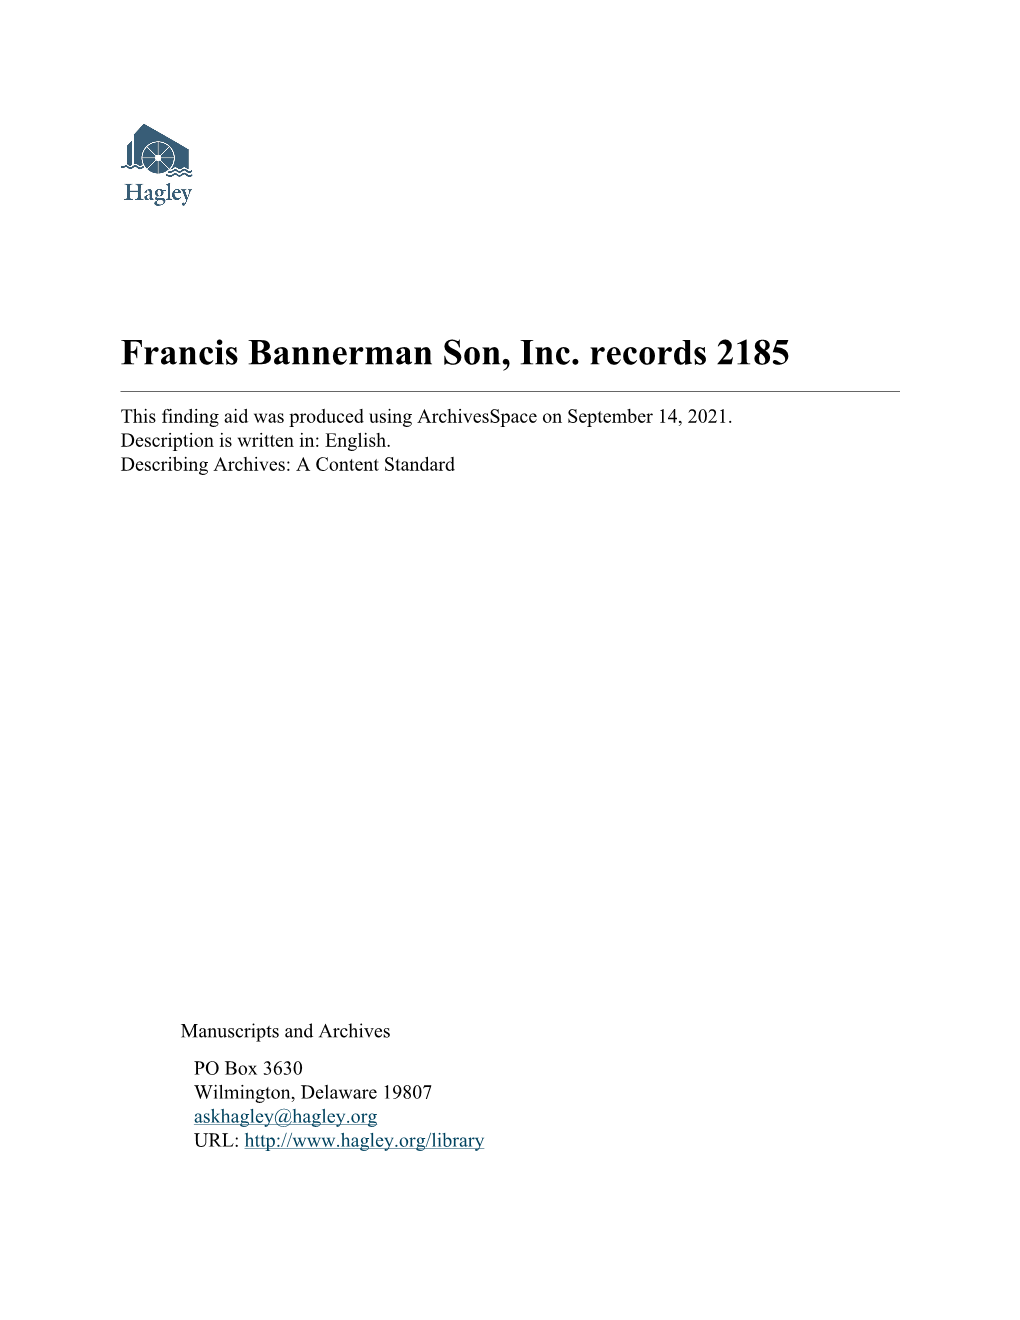 Francis Bannerman Son, Inc. Records 2185